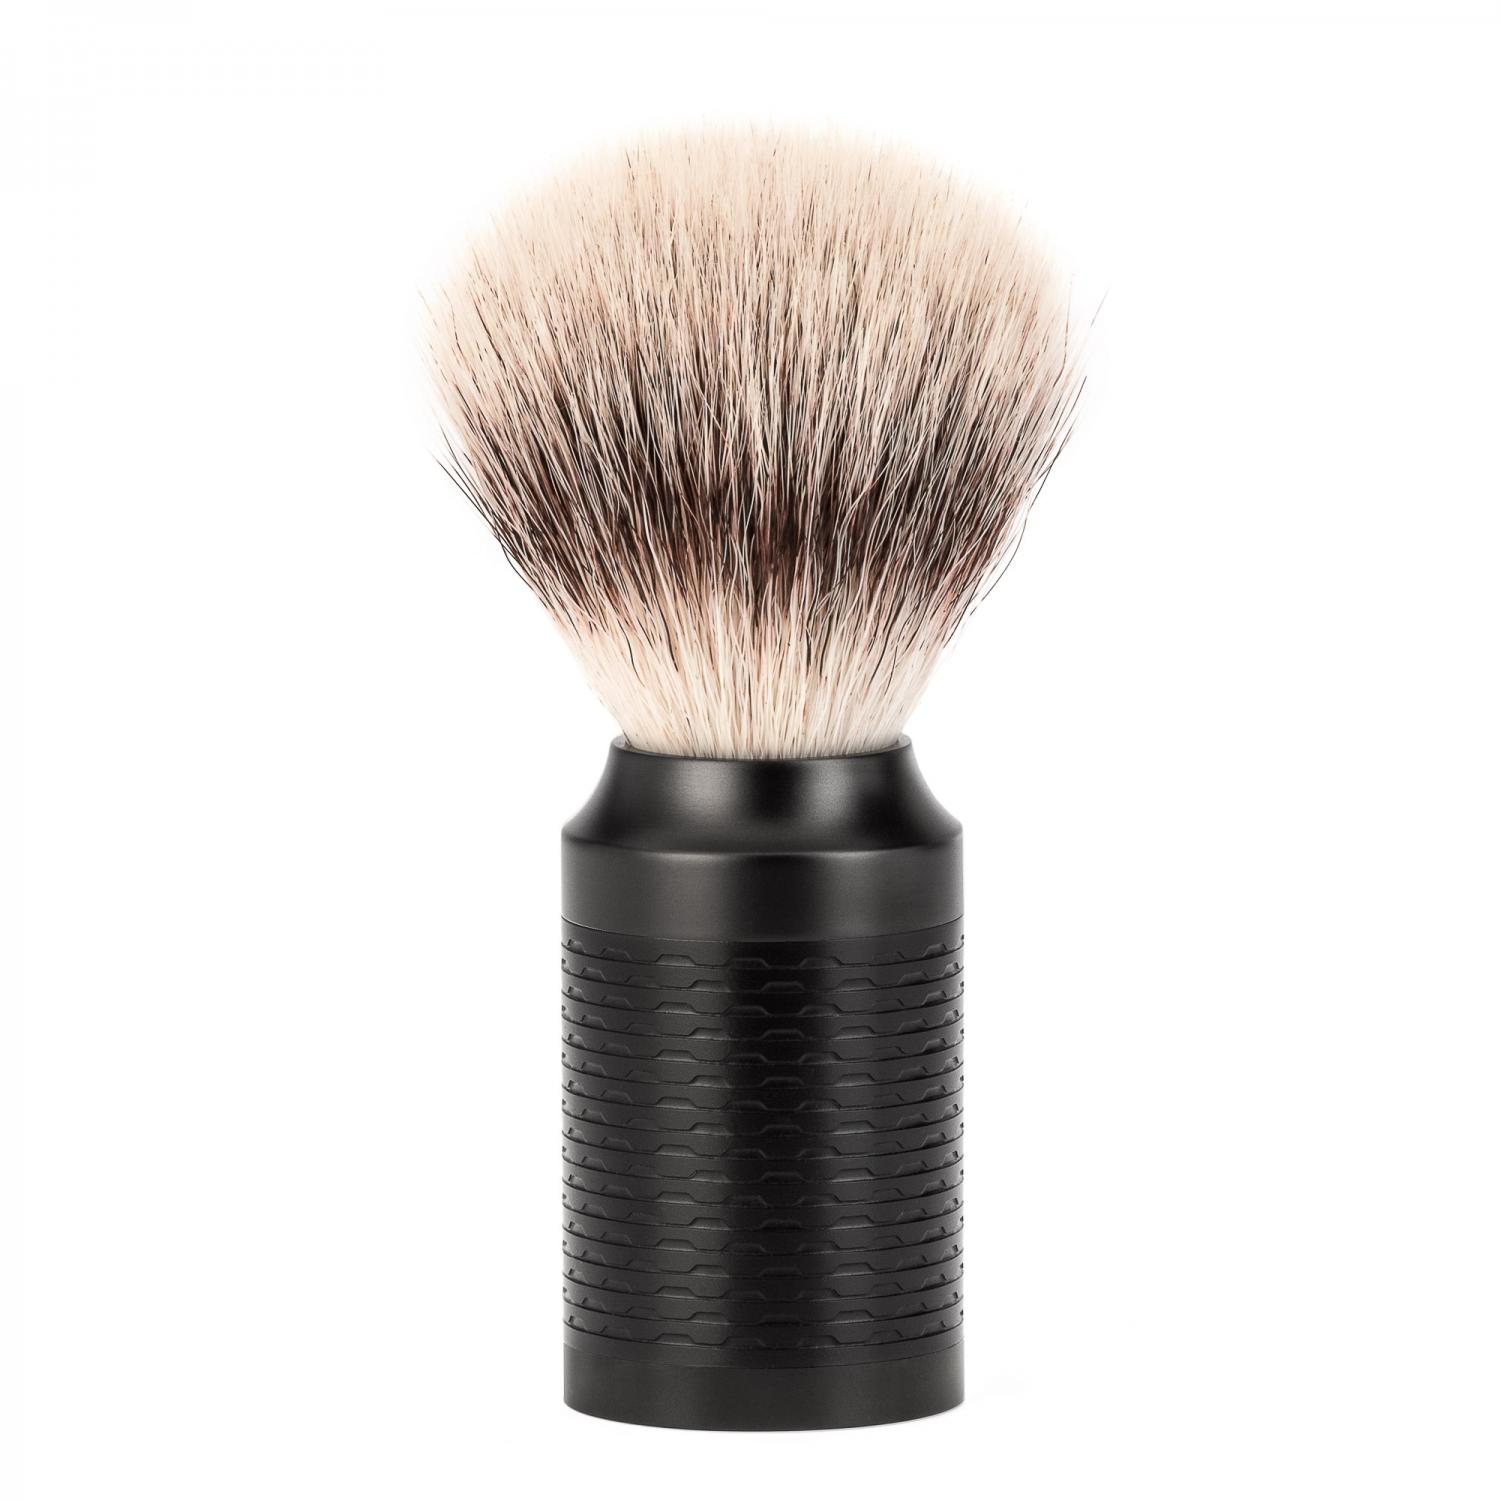 MUHLE ROCCA Black Silvertip Fibre Shaving Brush